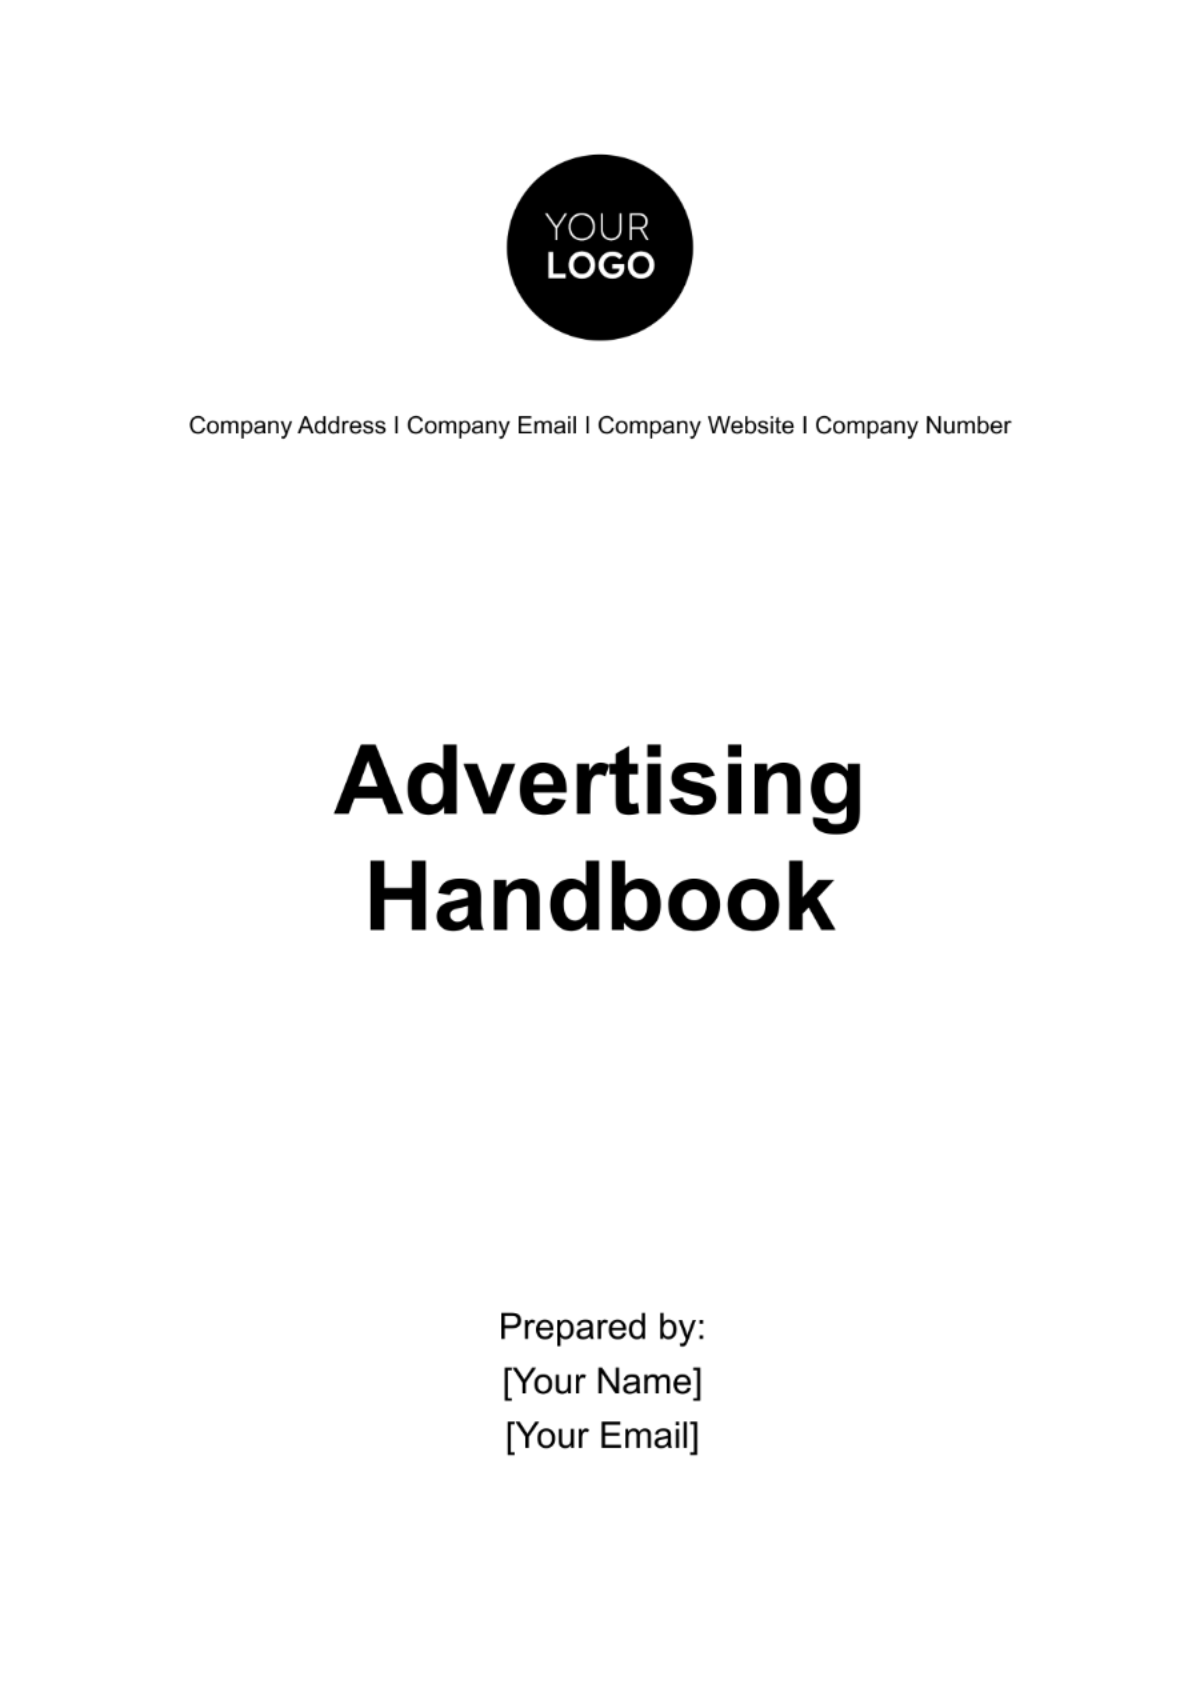 Advertising Handbook Template